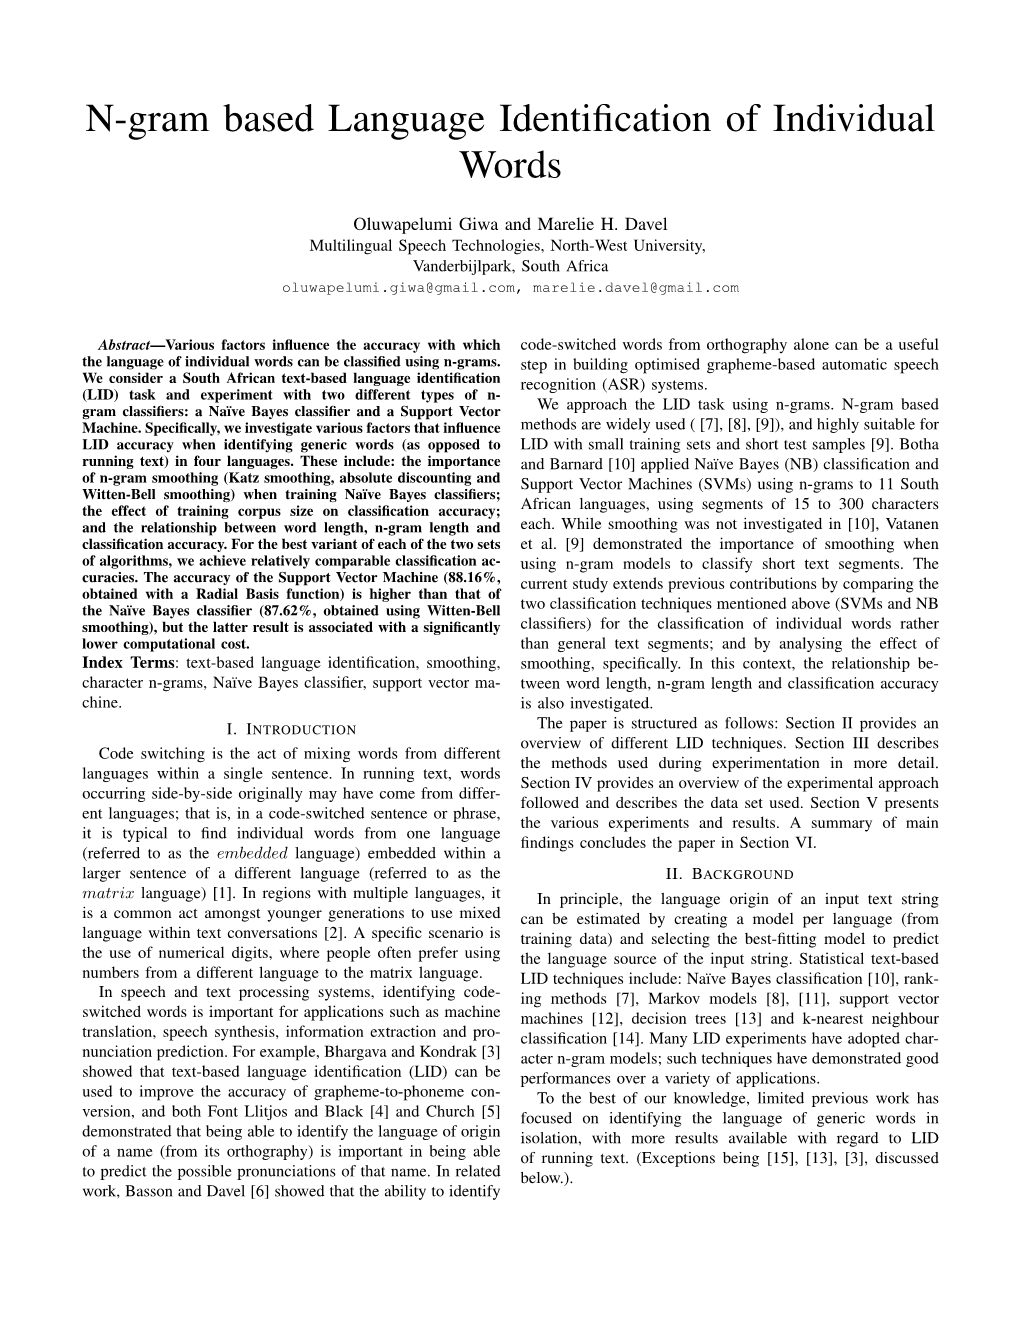 N-Gram Based Language Identification of Individual Words